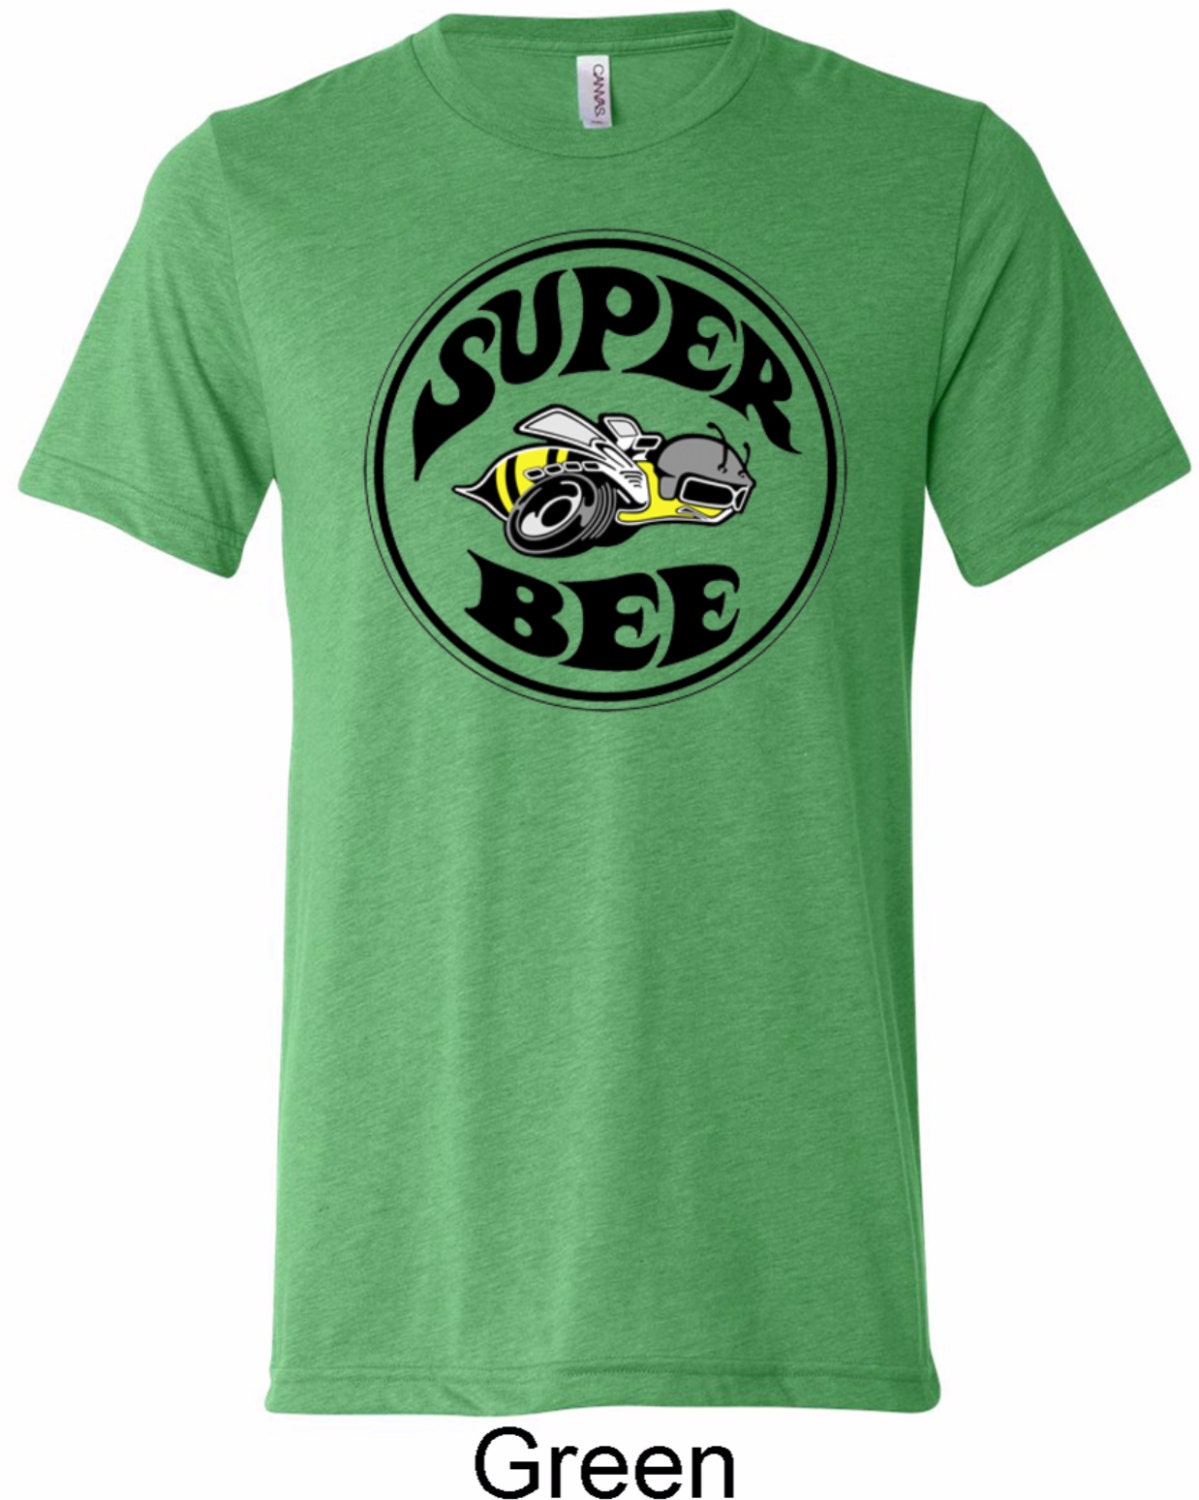 Dodge Super Bee Tri Blend Crewneck Tee T-Shirt 20338Hl2-C3413